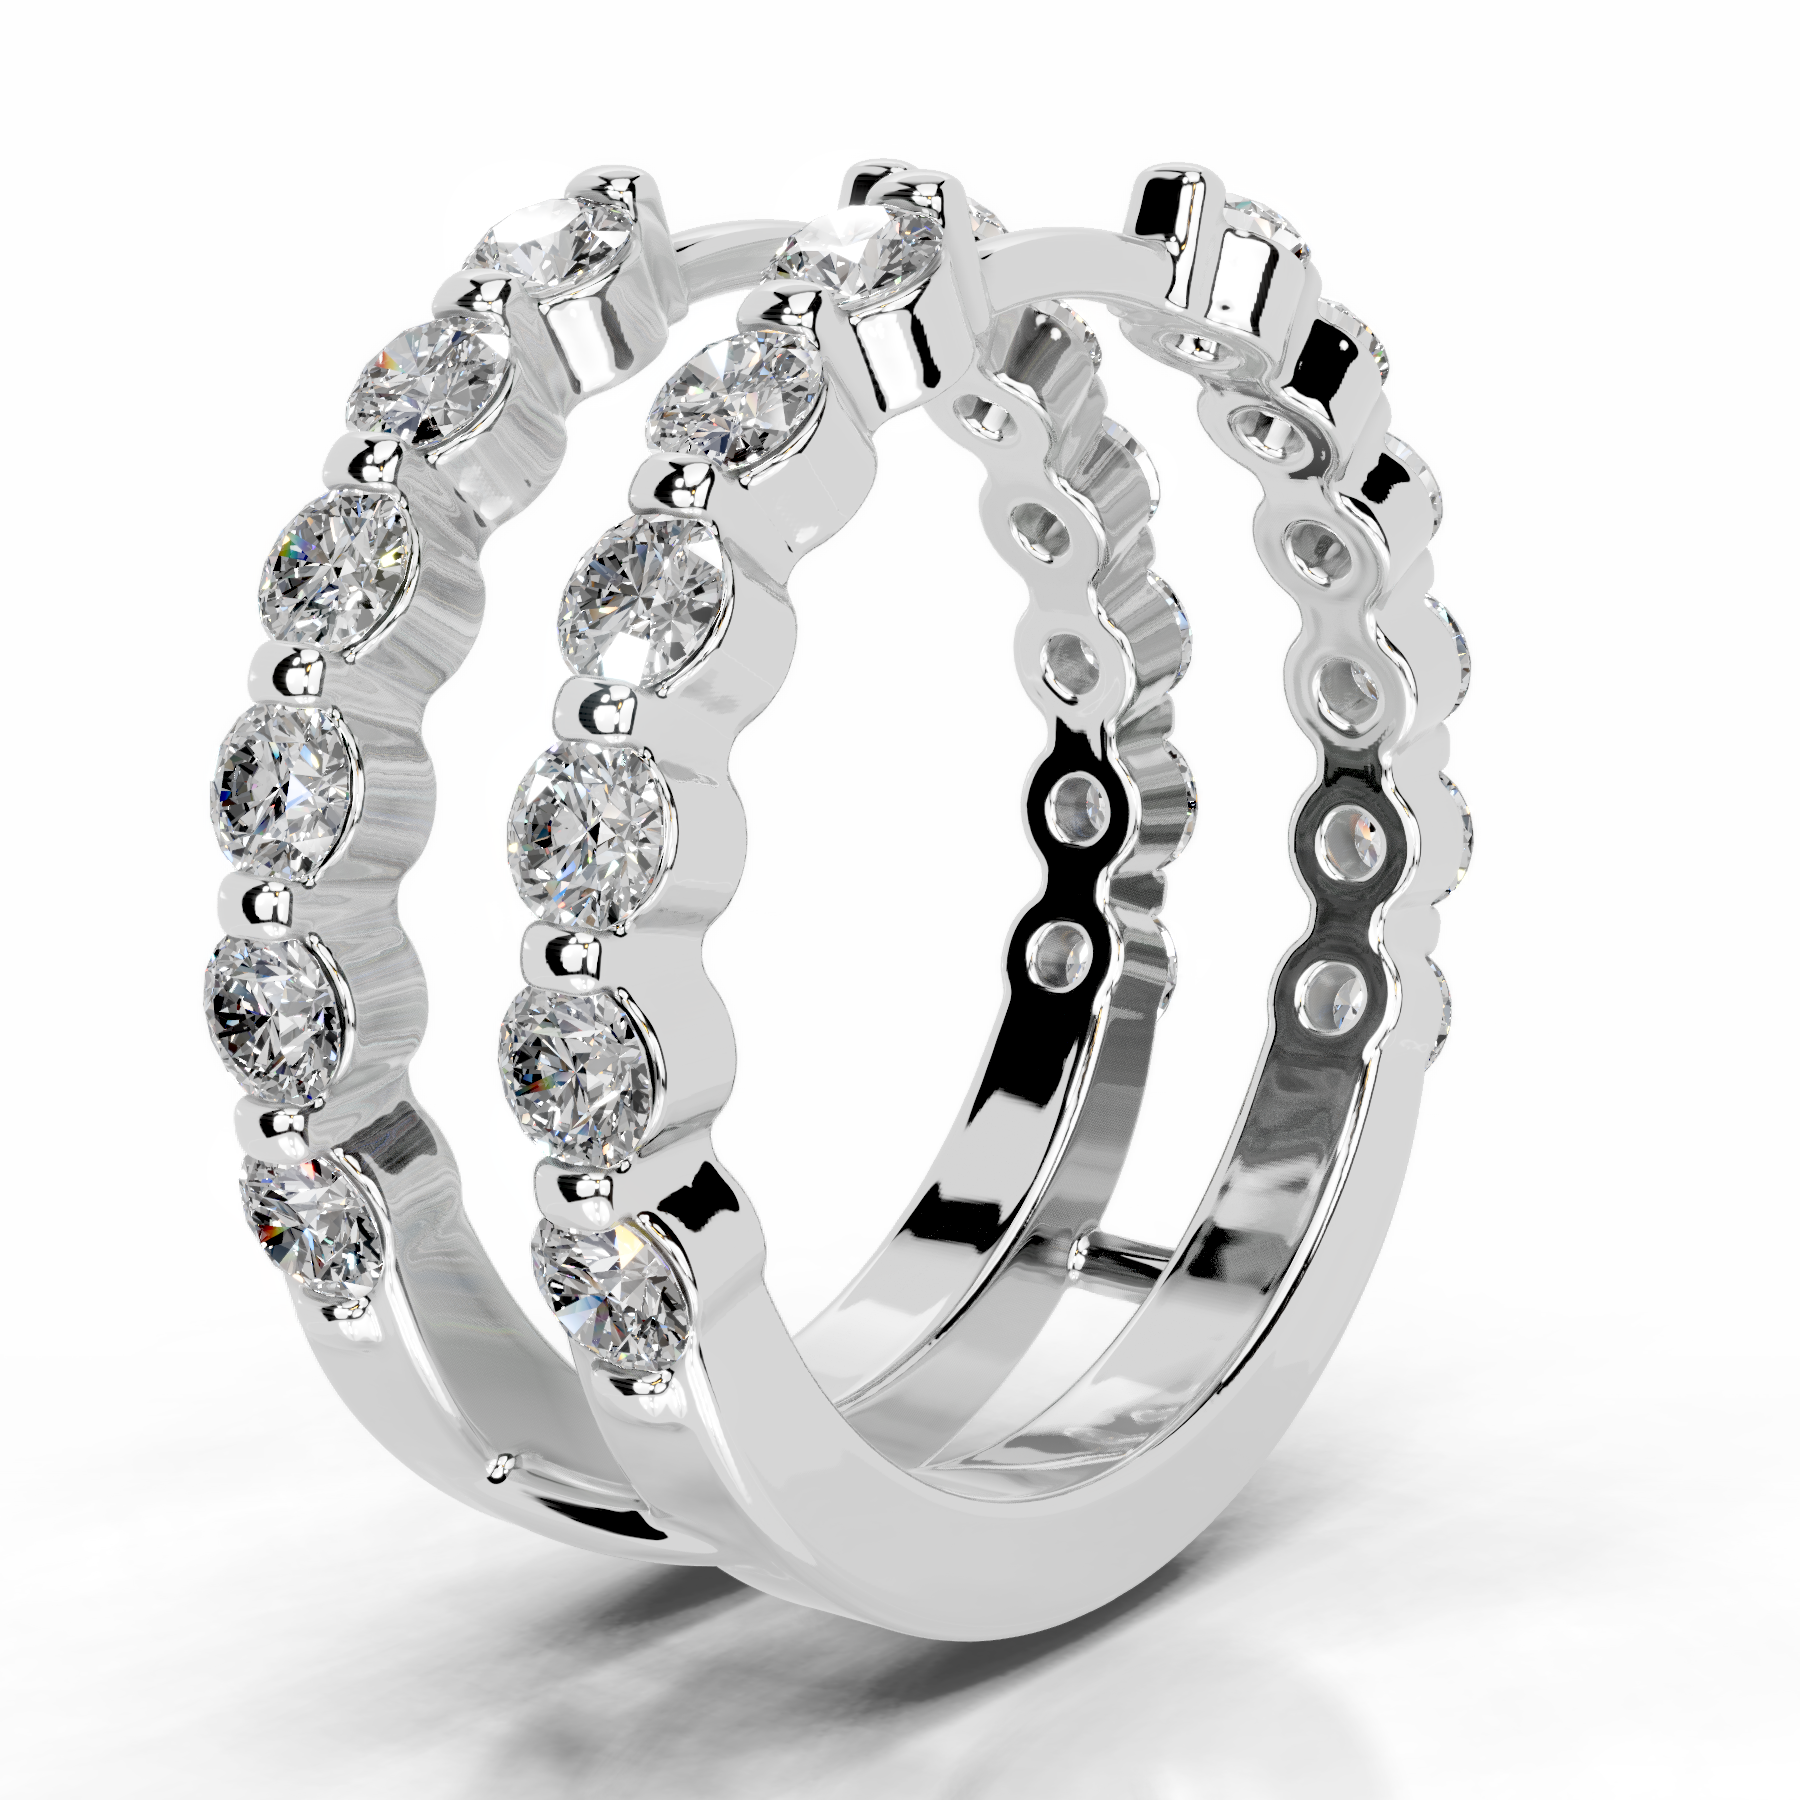 Ashley Diamond Wedding Ring   (1.25 Carat) -14K White Gold